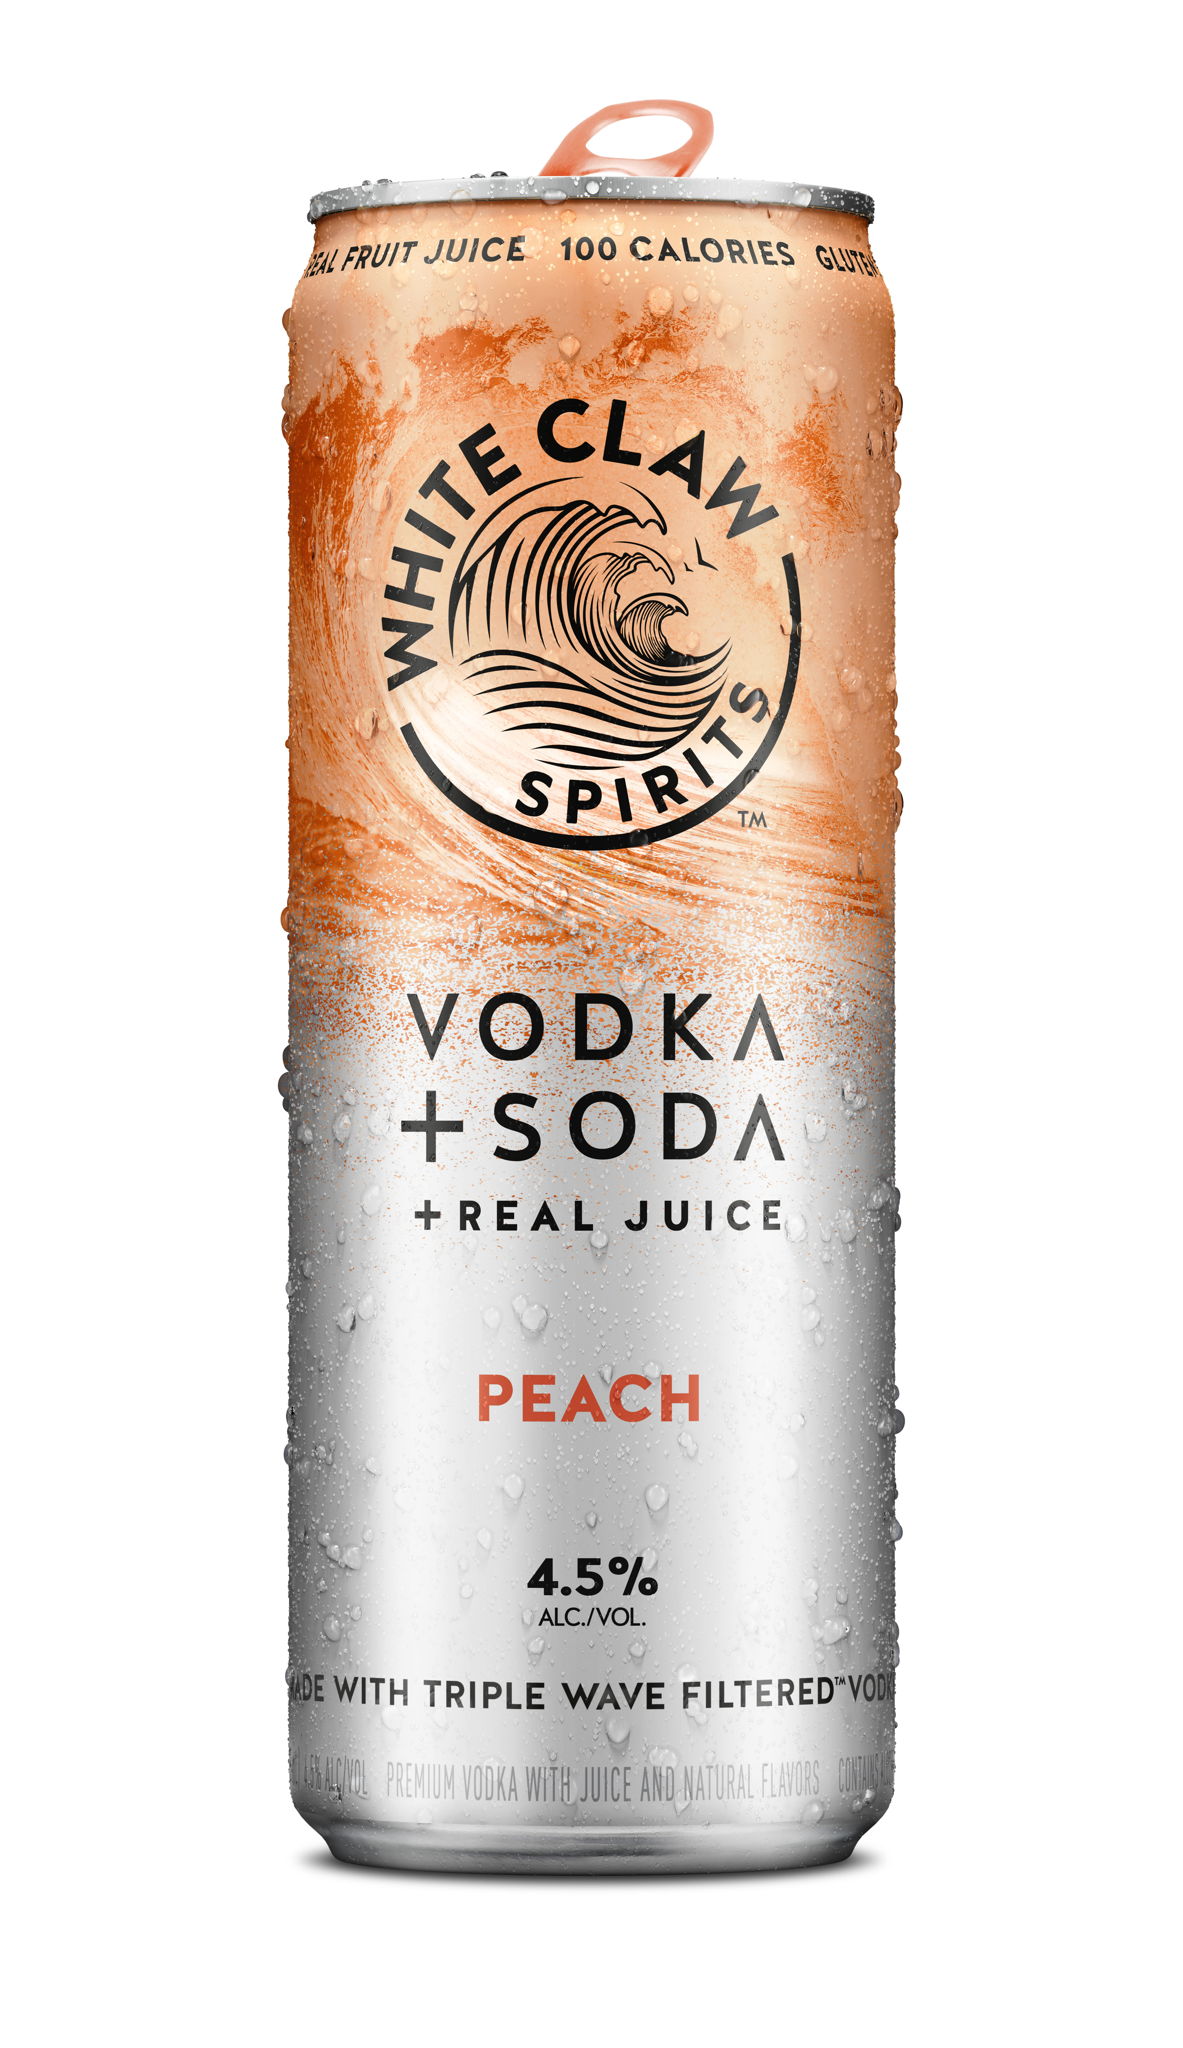 White Claw Vodka + Soda Peach.jpg